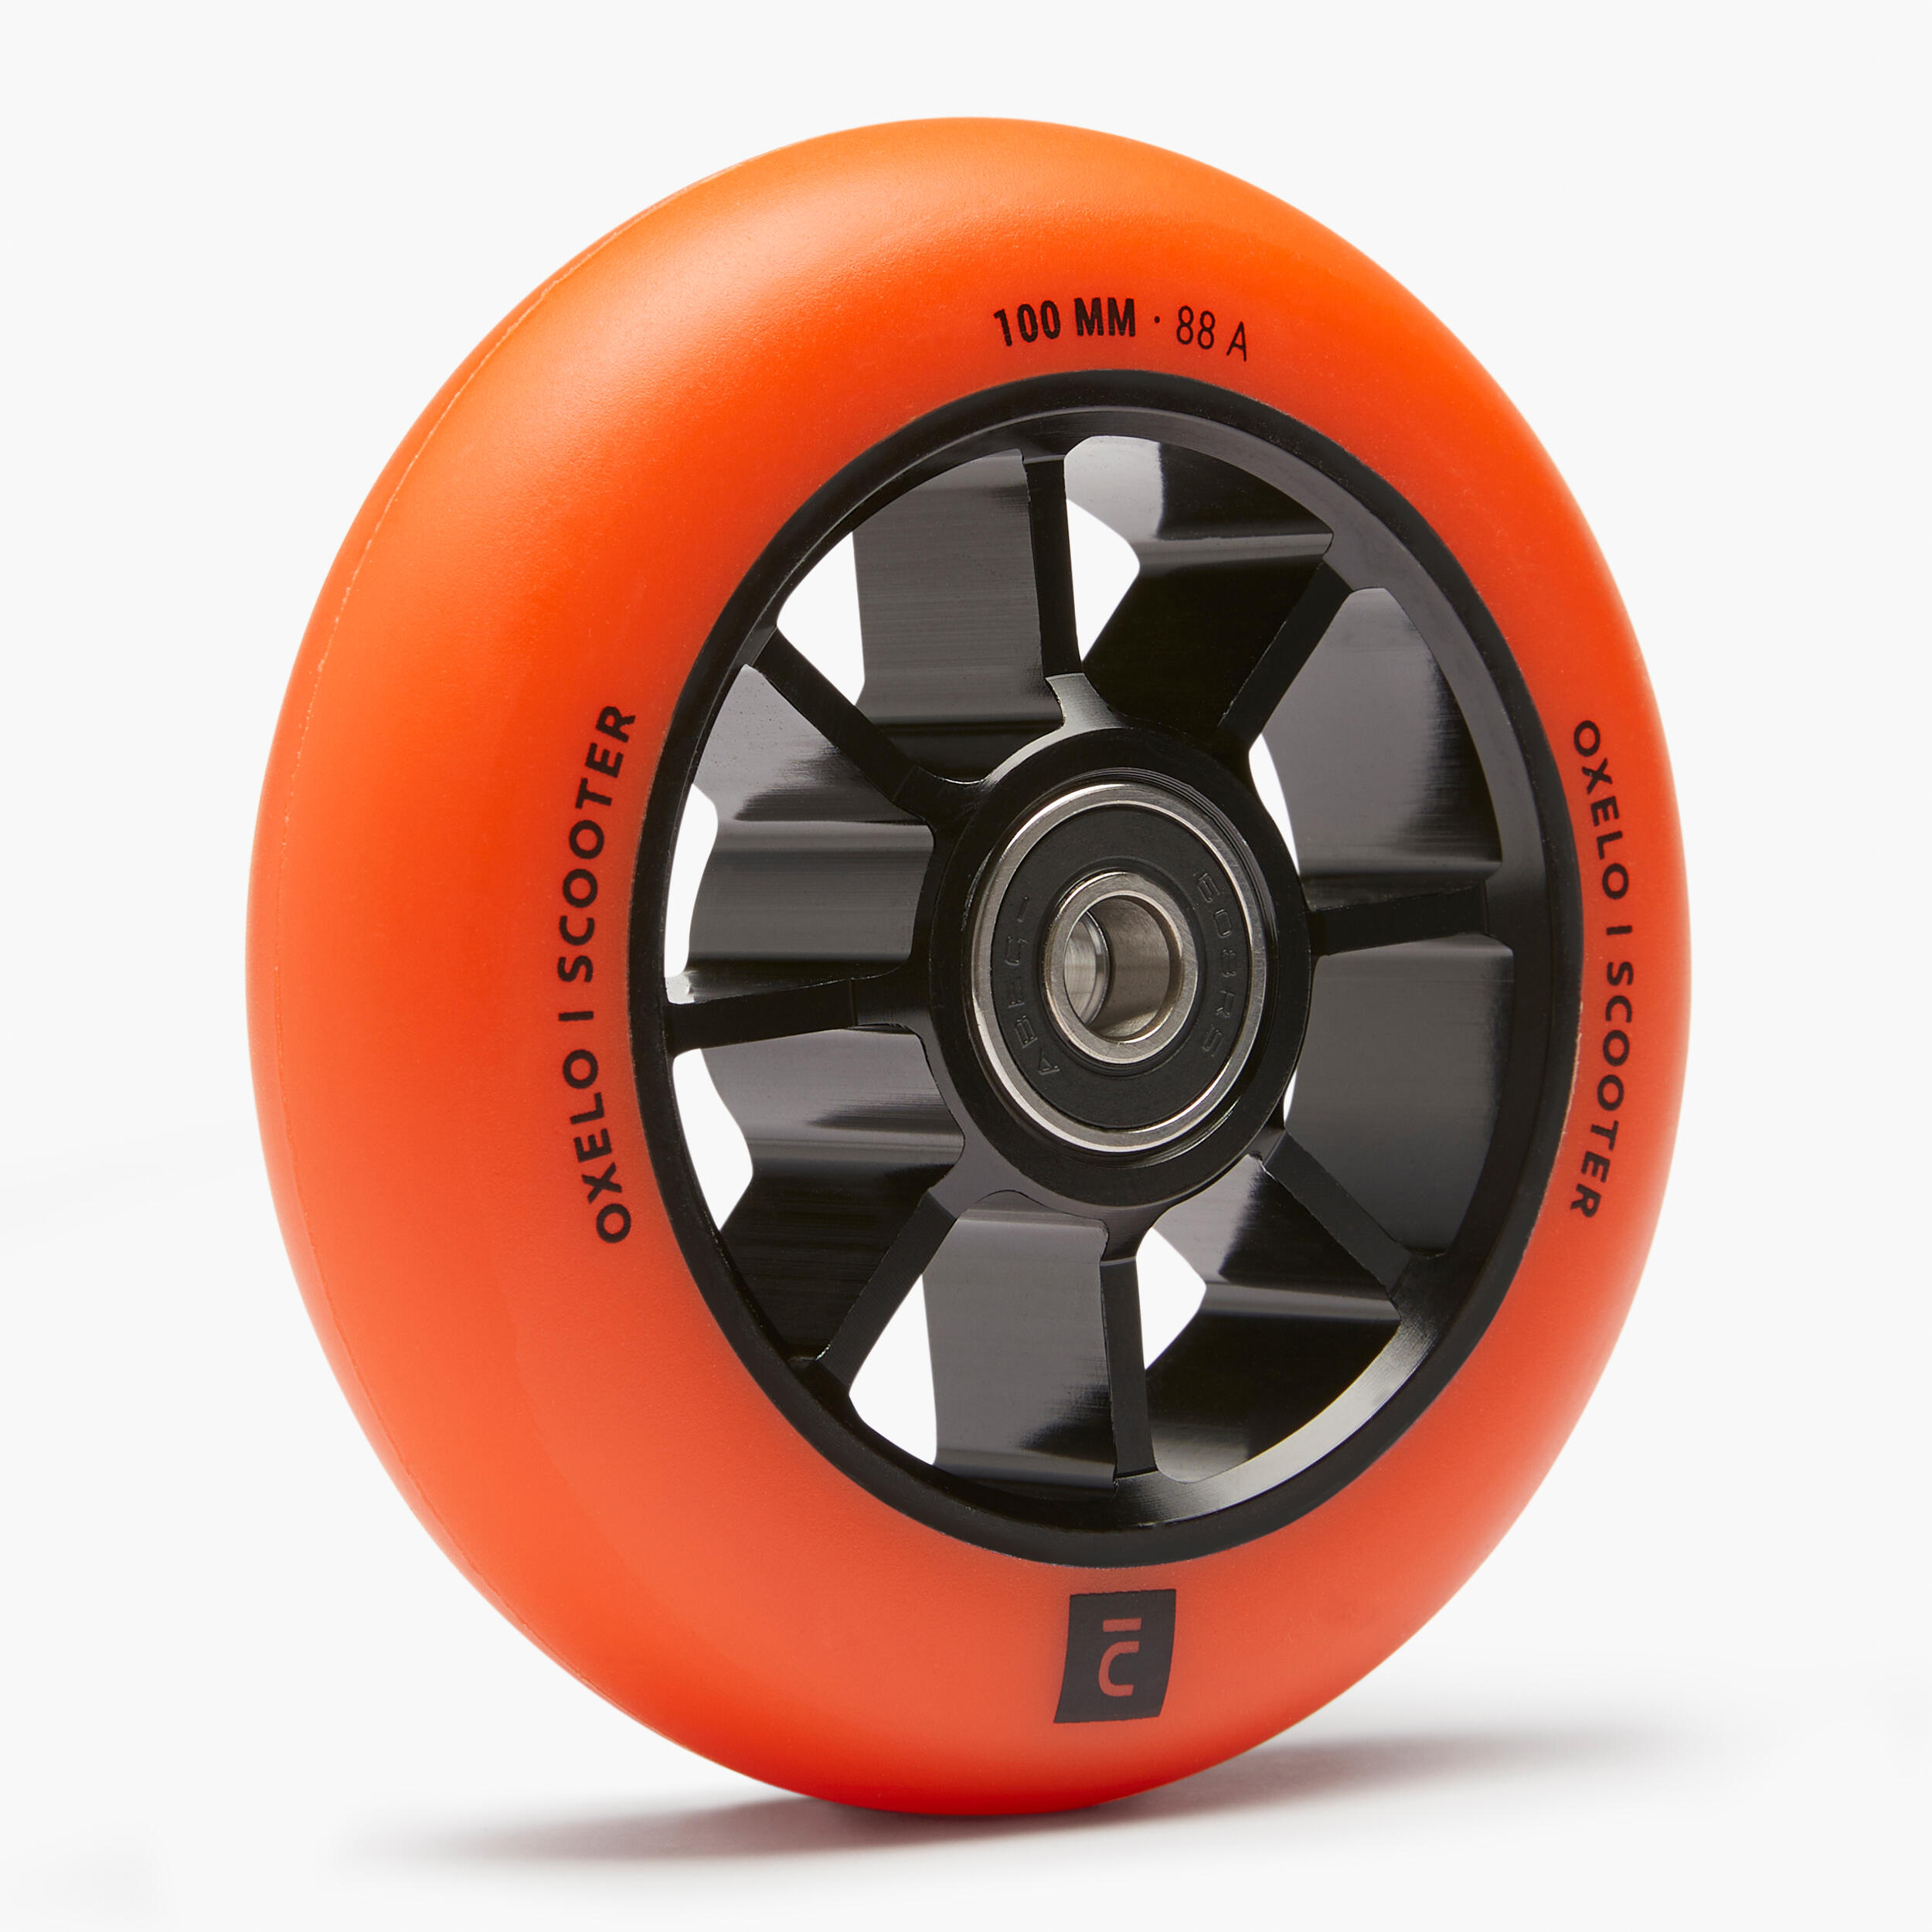 100 mm Freestyle Wheel with Black Alu Rim & Fluo Orange PU85A Rubber 2/3